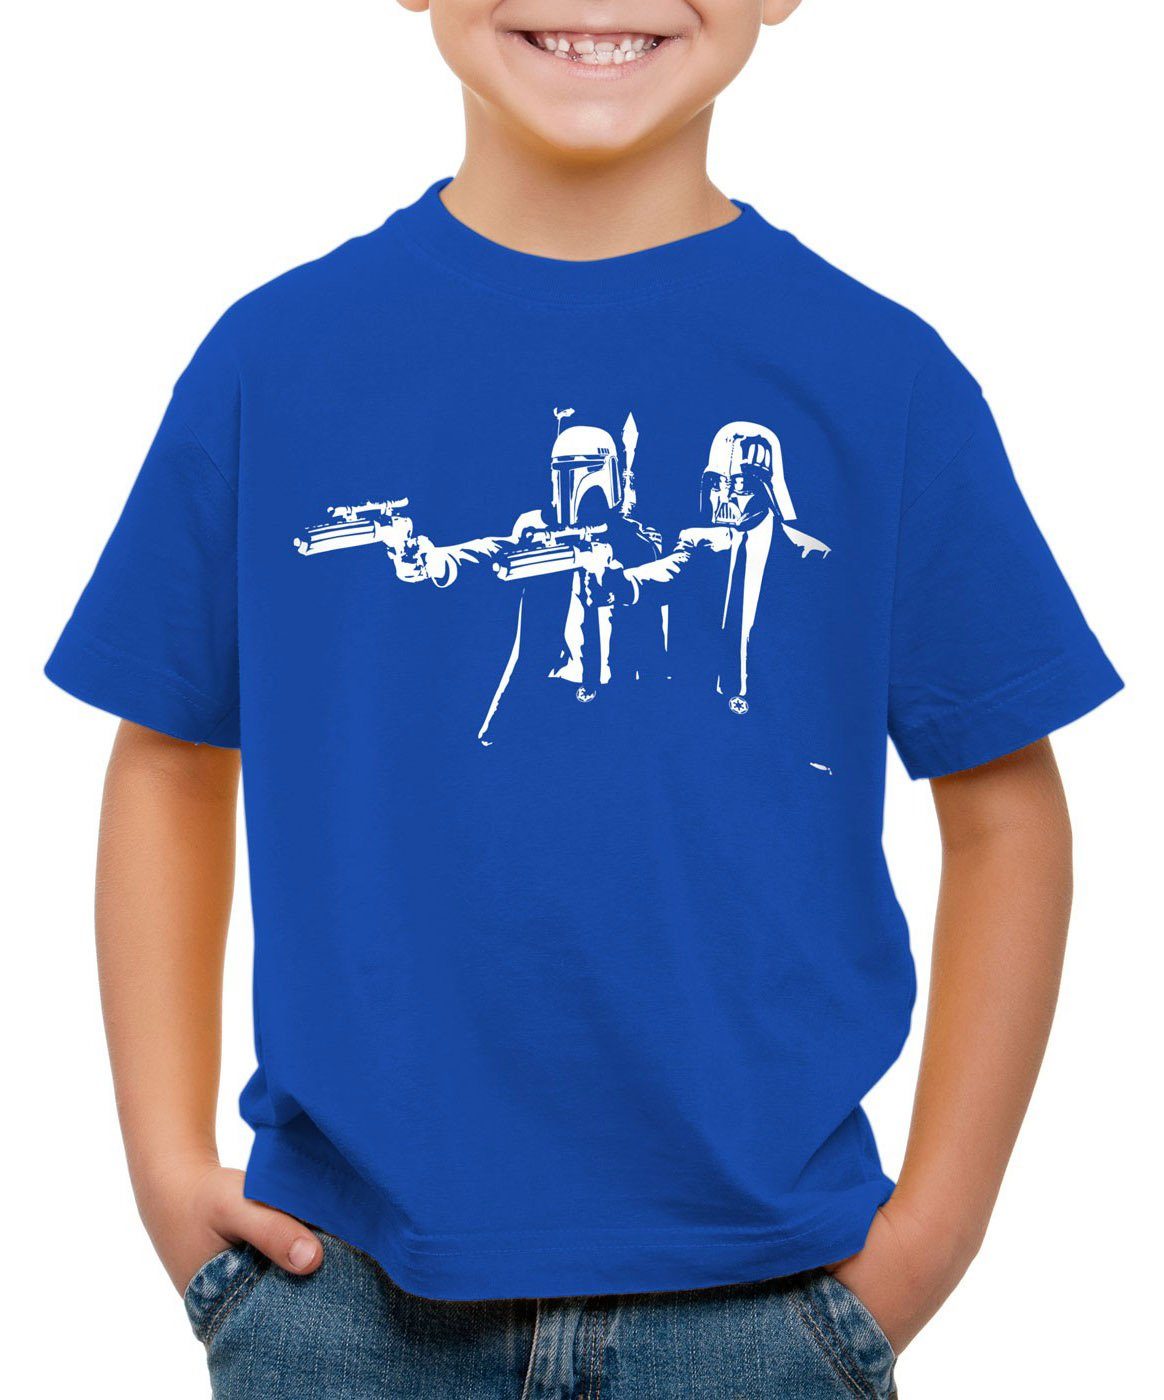 style3 Print-Shirt Kinder T-Shirt Darth Fiction fett star pulp wars imperium boba blau